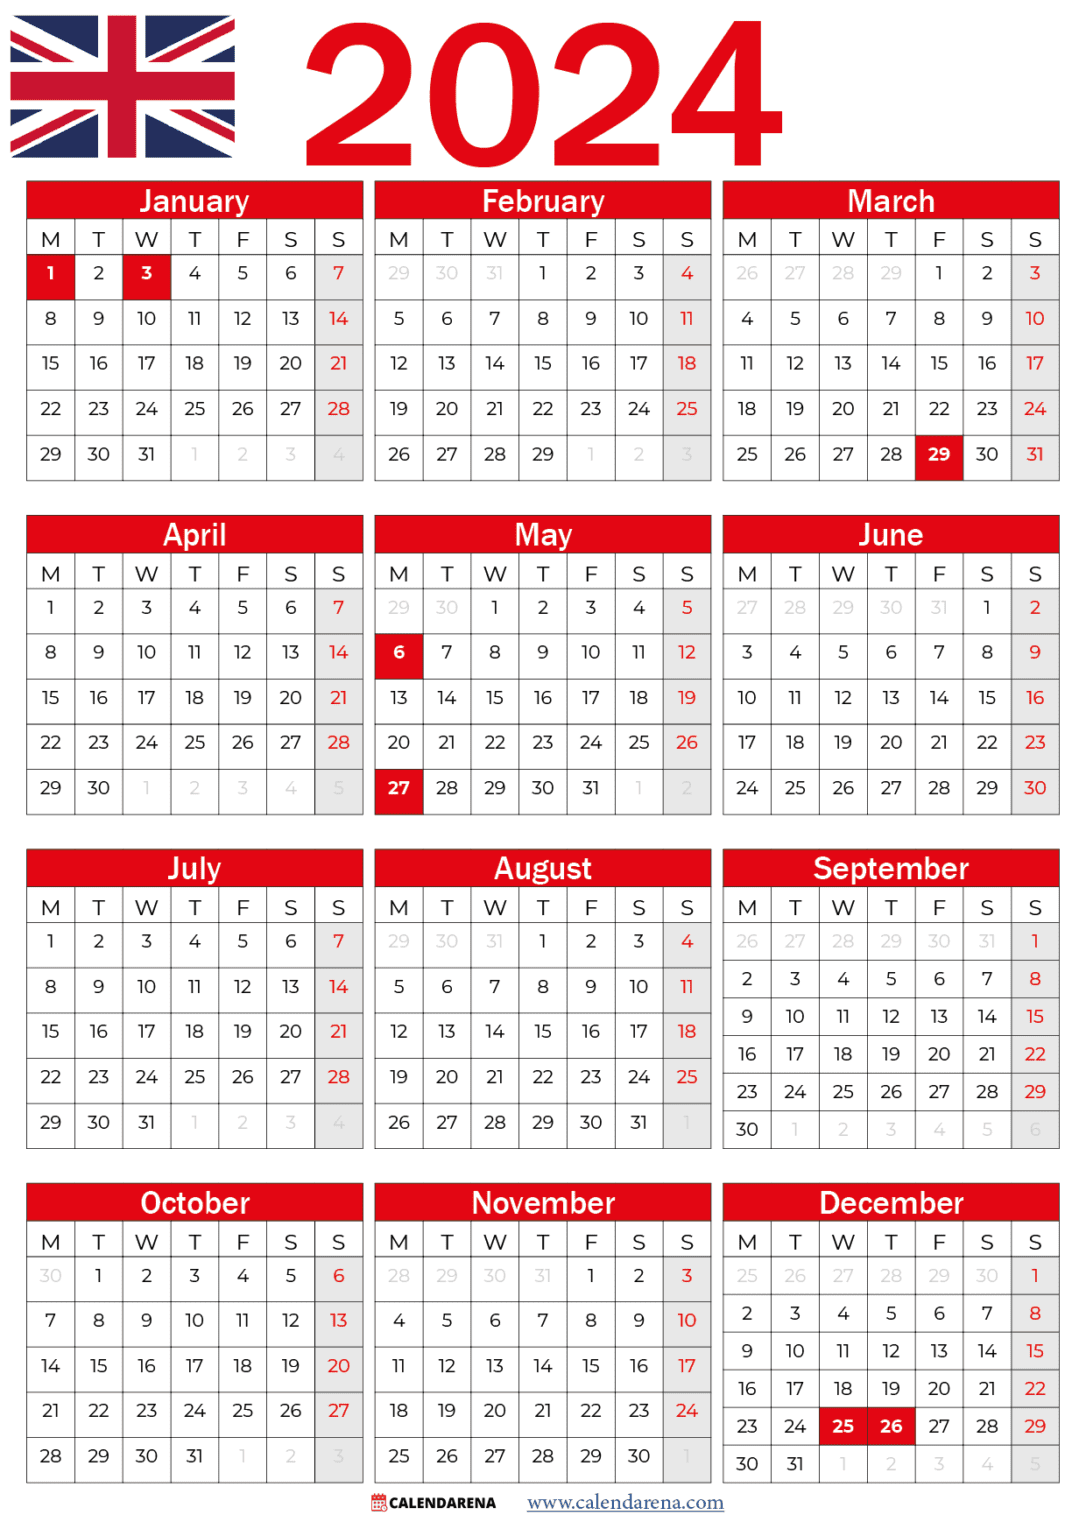 2024 Calendar Uk With Bank Holidays Printable Jan 2024 Calendar - Free Printable 2024 Monthly Calendar UK With Bank Holidays